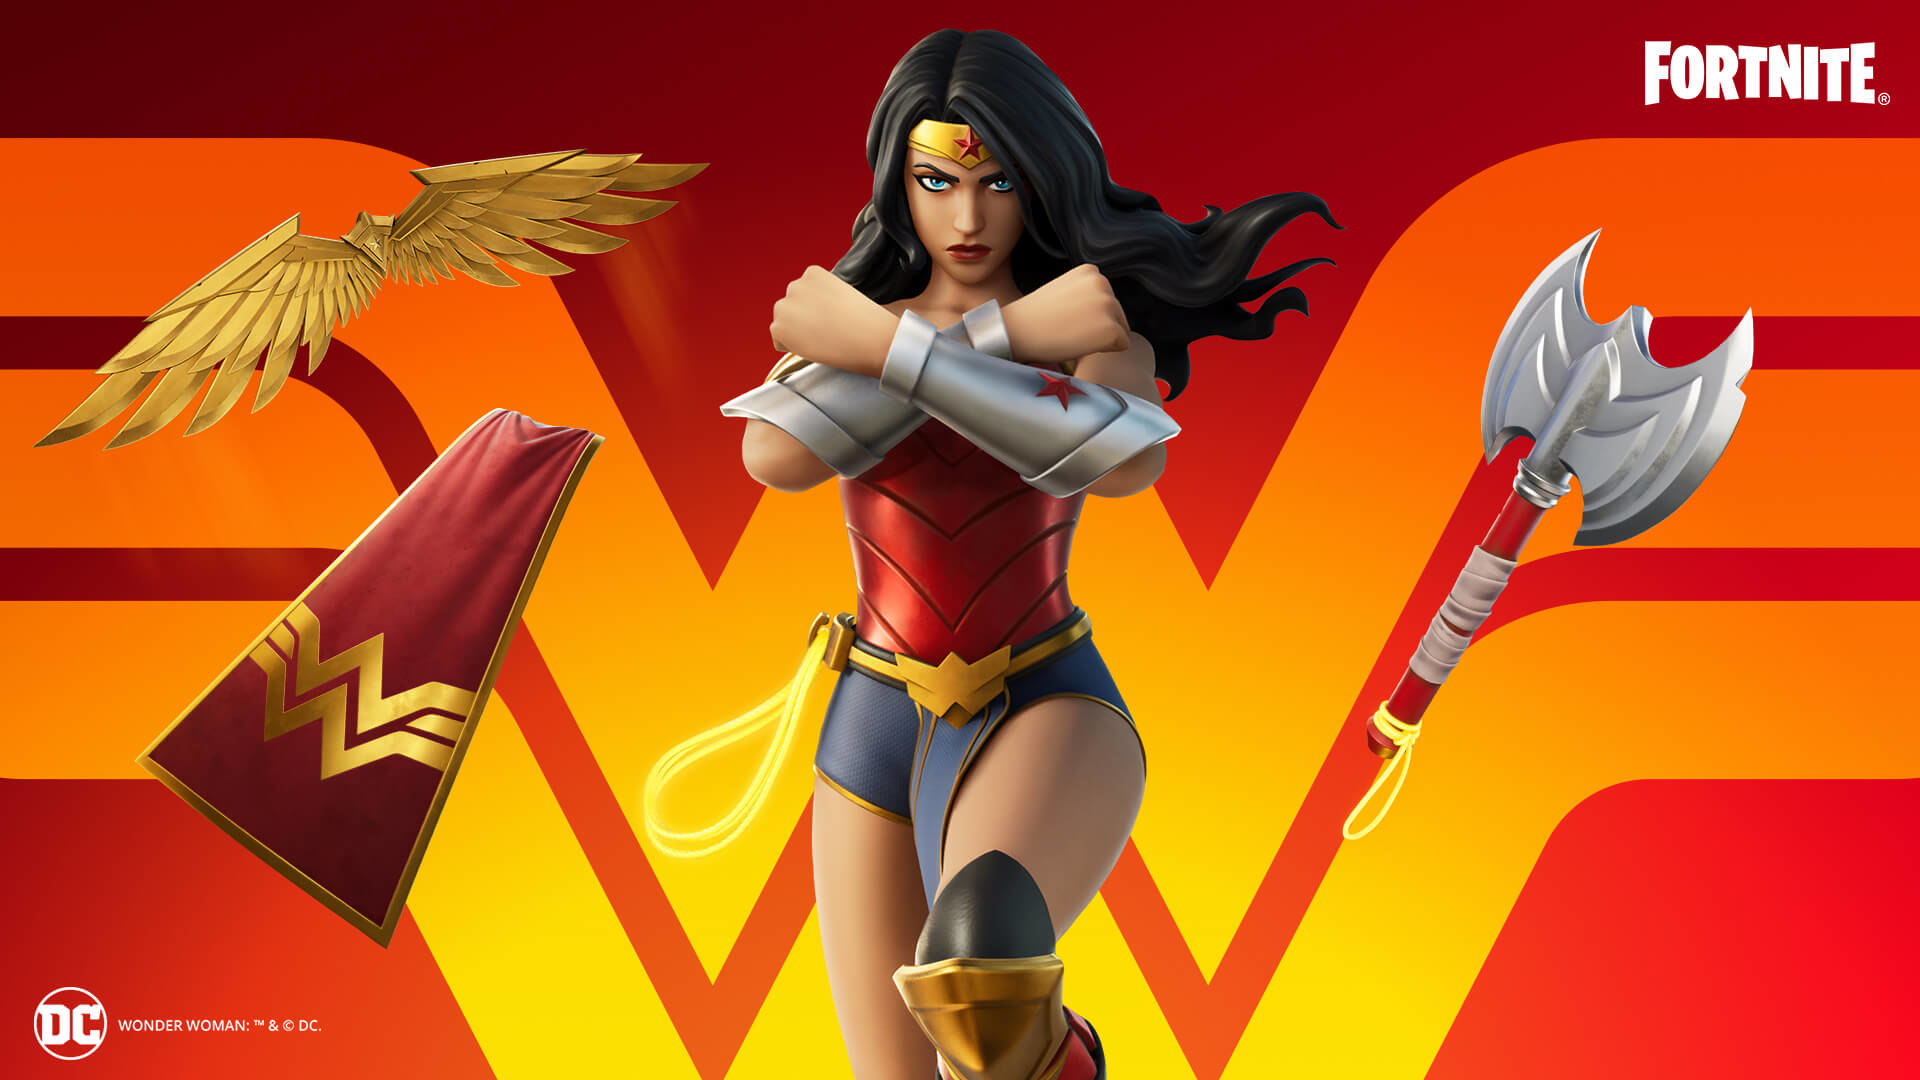 Wonder Woman Background Photos free download